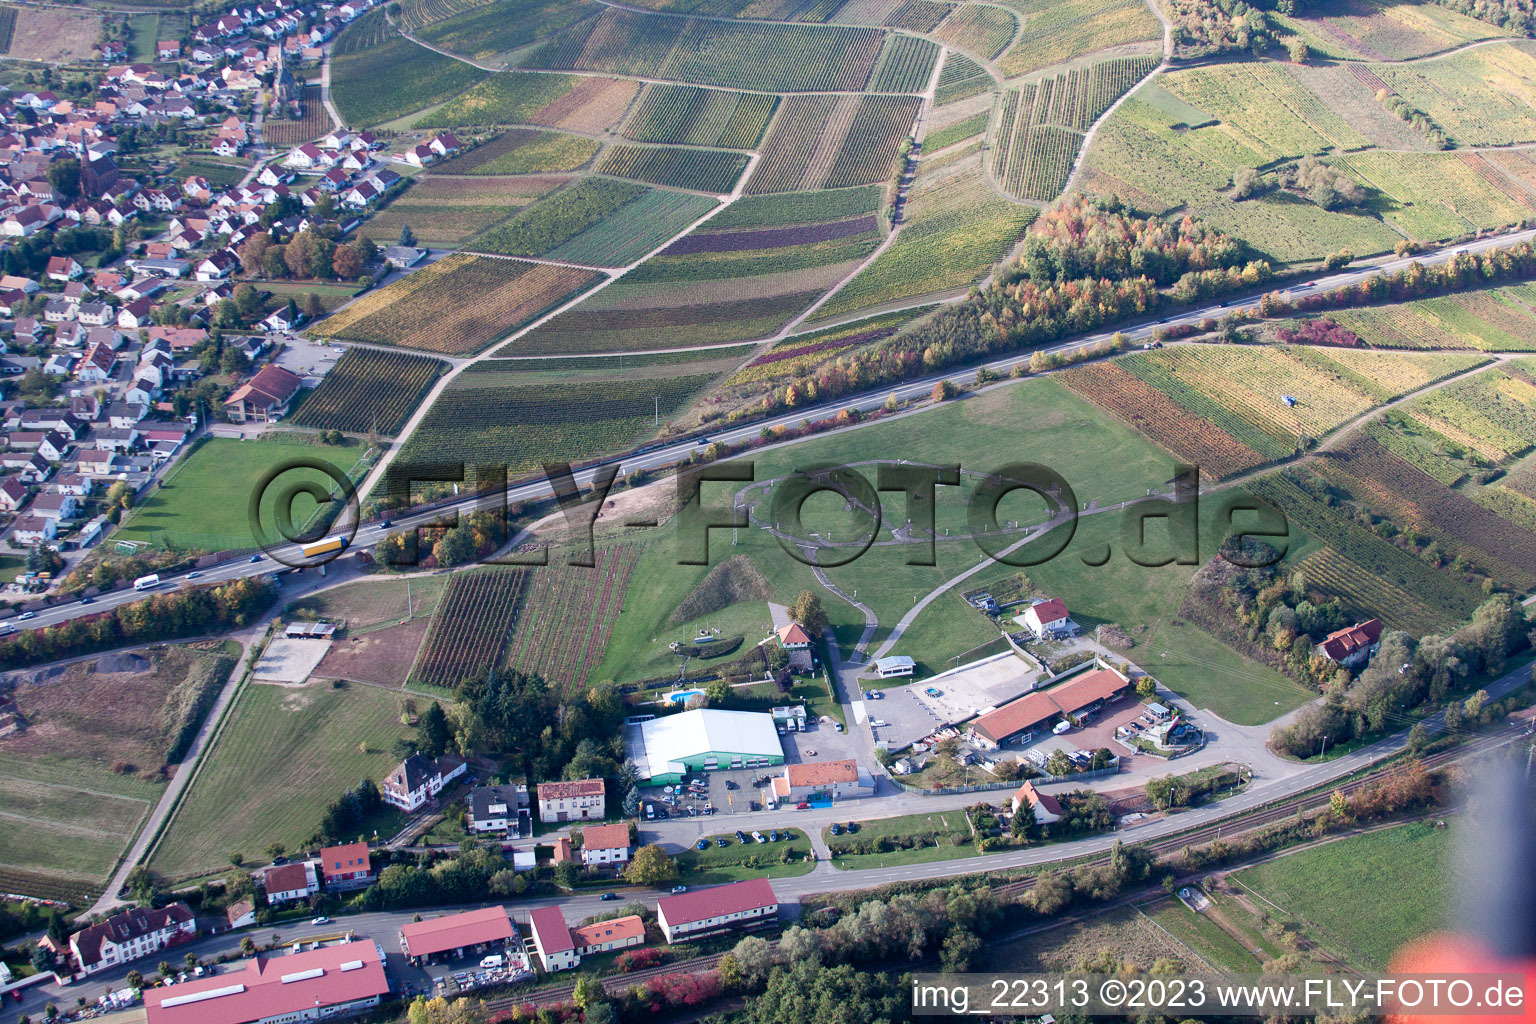 Bird's eye view of Siebeldingen in the state Rhineland-Palatinate, Germany